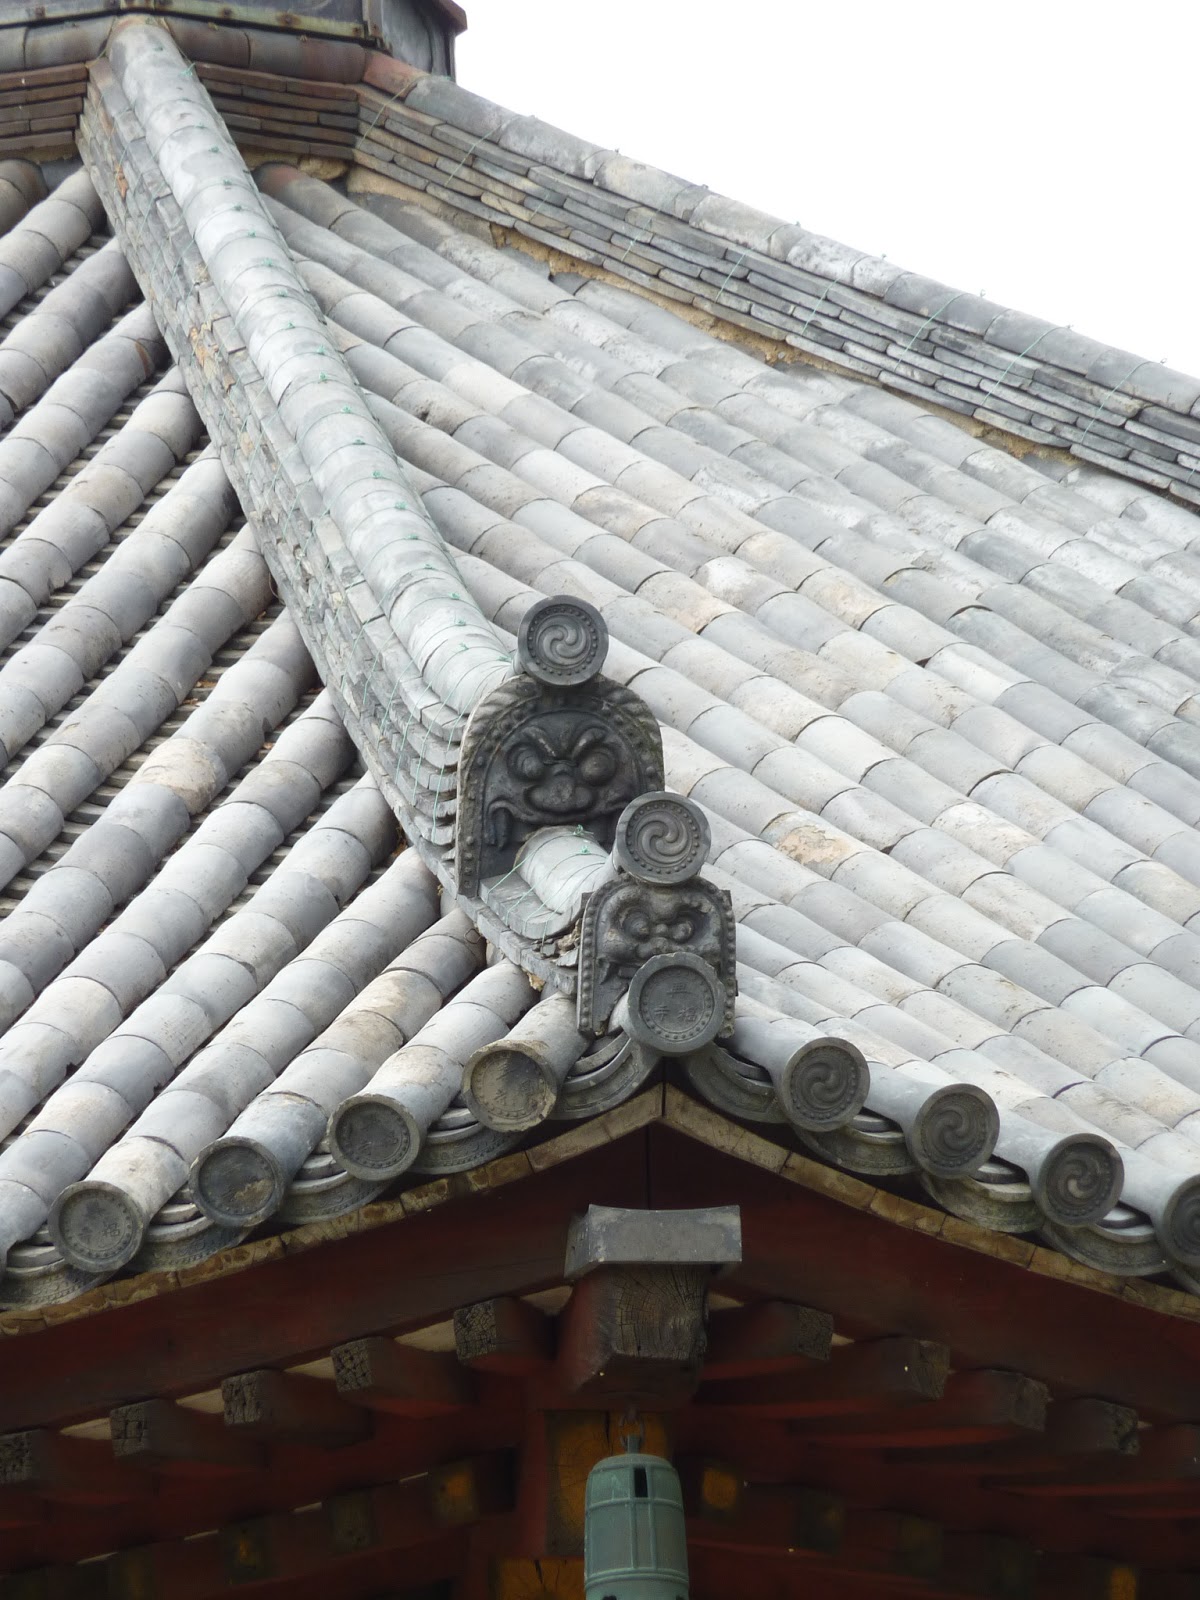 The Hazel Files: Kawara: Japanese Roof Tiles